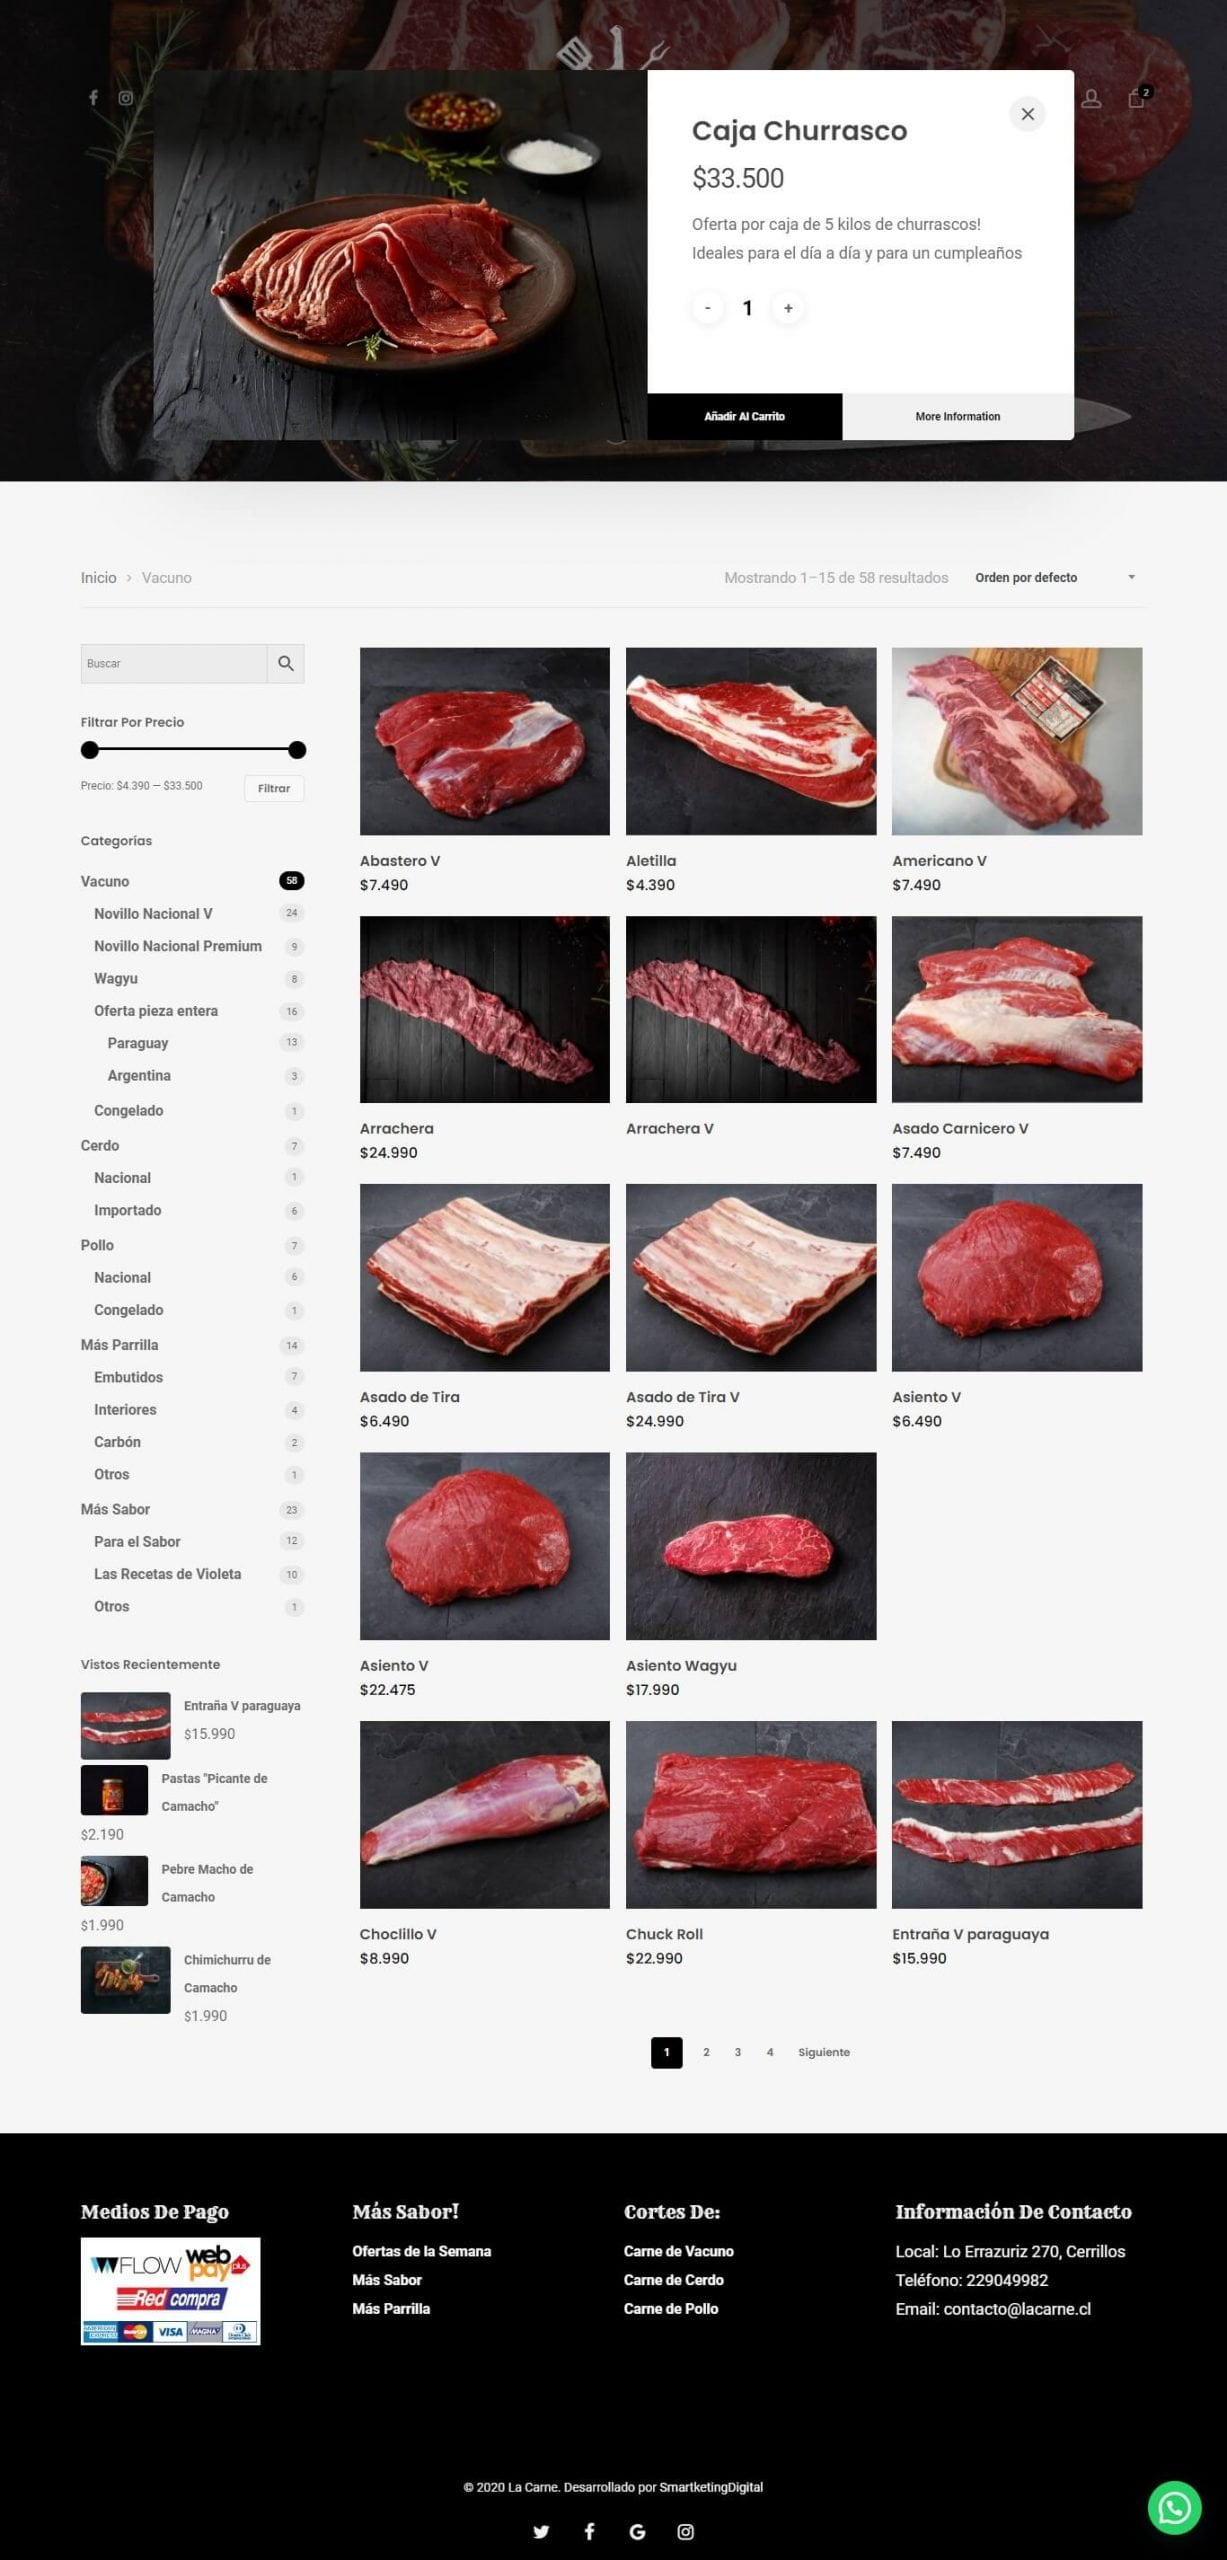 La Carne carnes